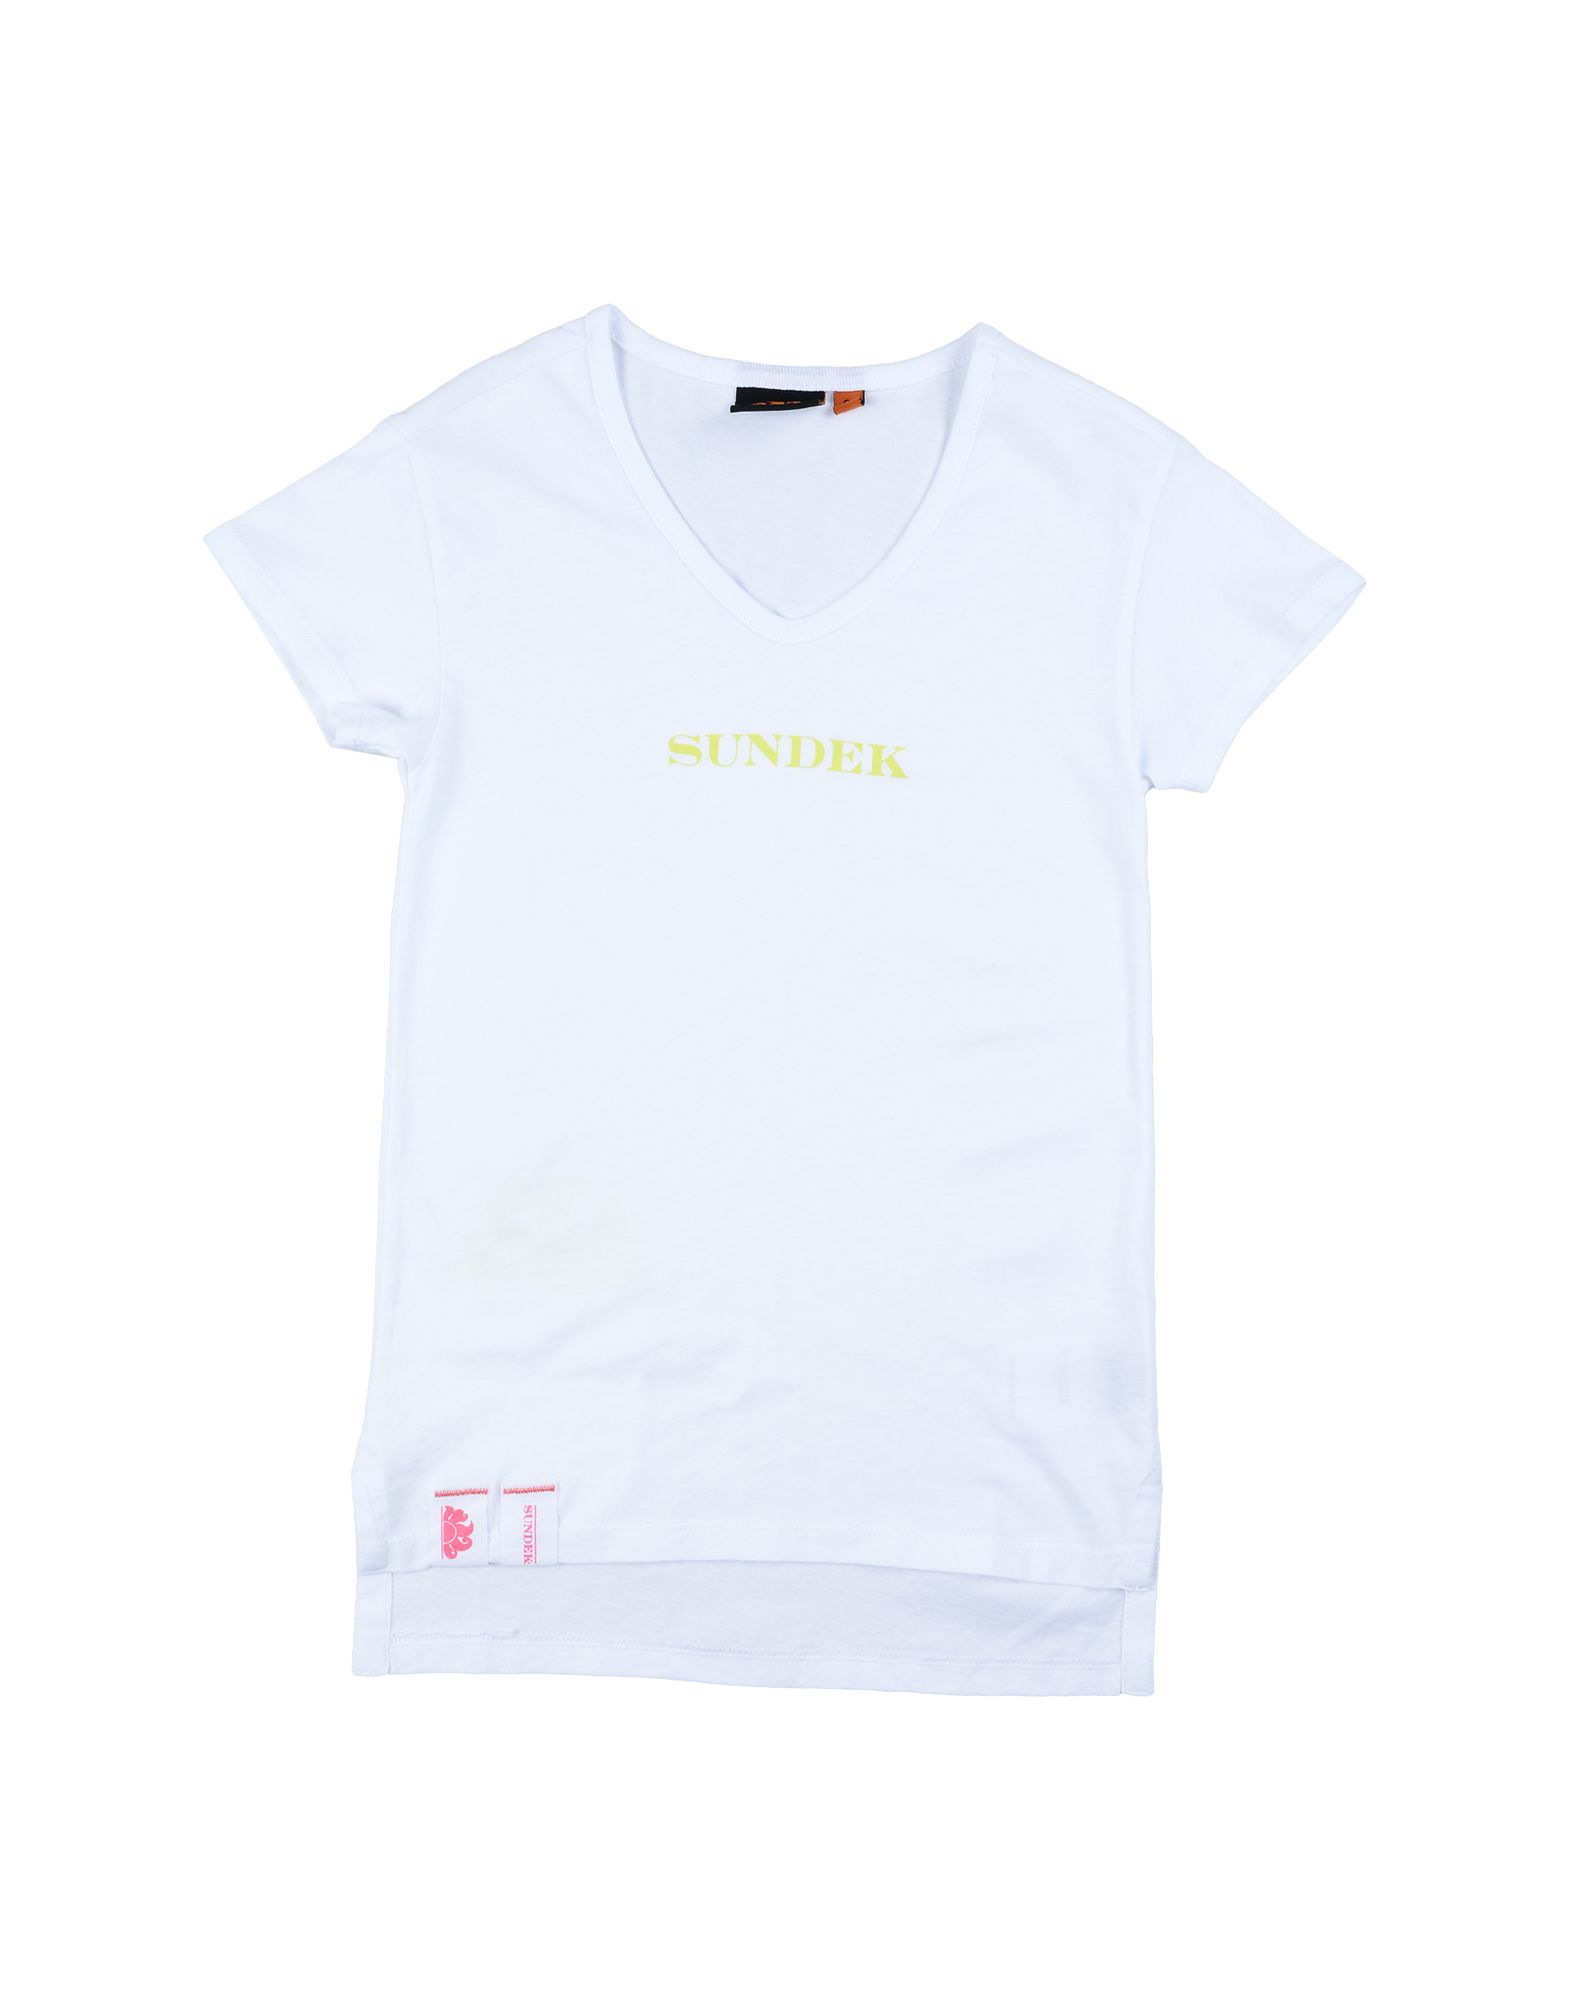 Sundek Kids' T-shirts In White